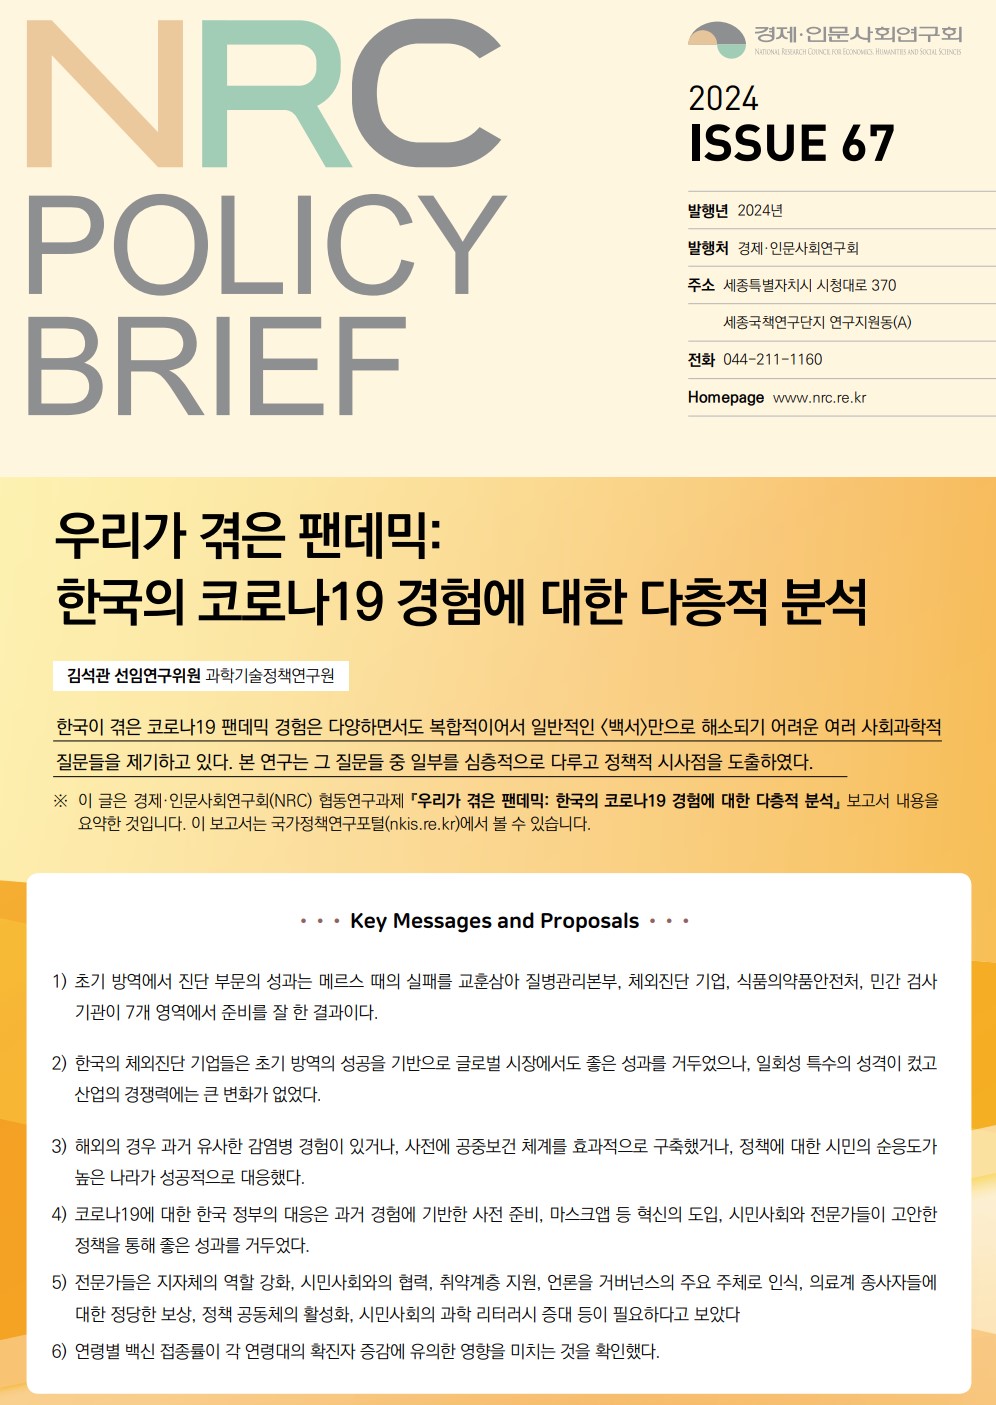 [NRC POLICY BRIEF] ISSUE 67. 우리가 겪은 팬데믹: 한국의 코로나19 경험에 대한 다층적 분석 - 상세 하단 참조